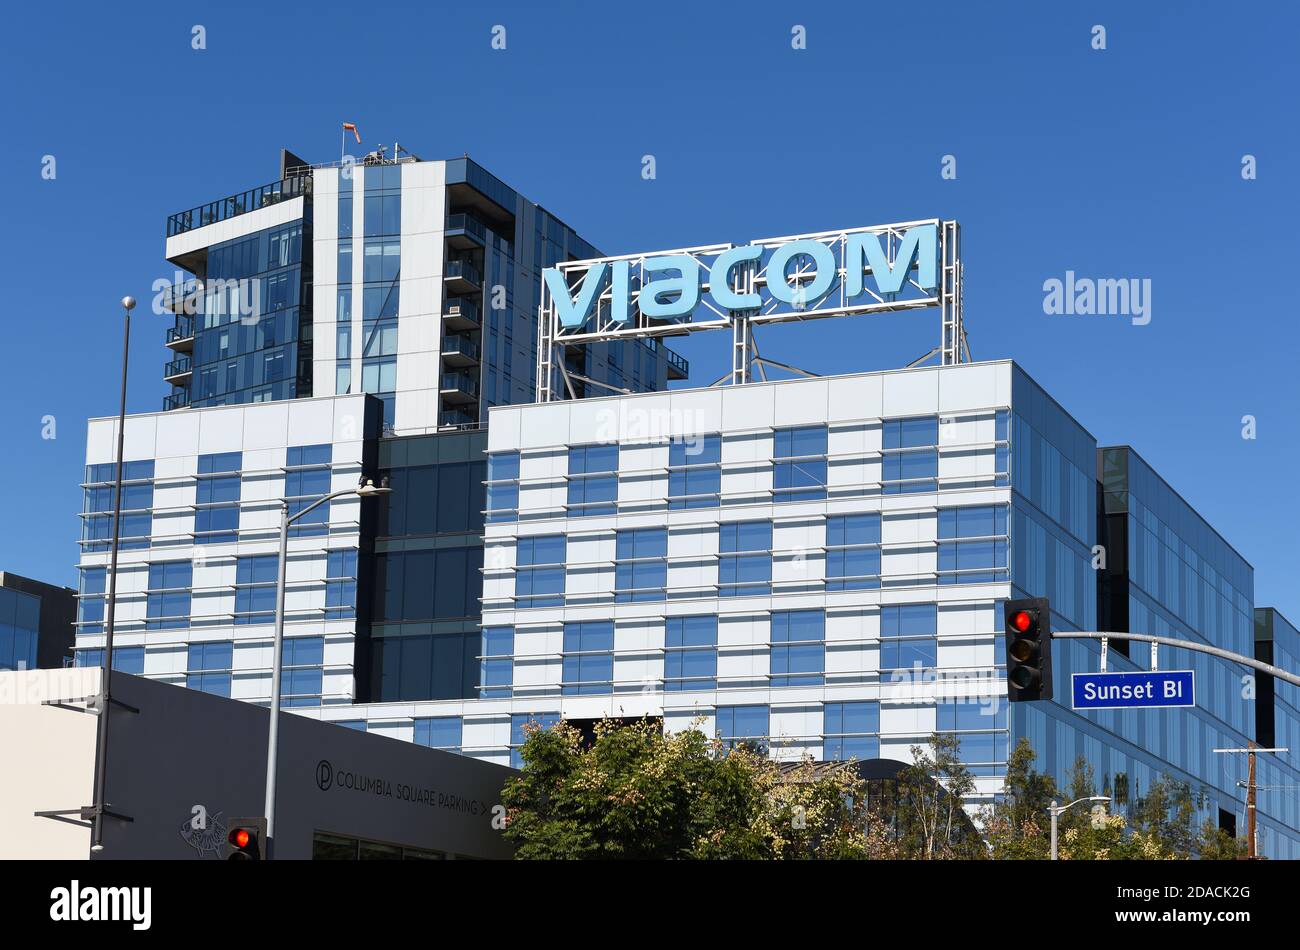 HOLLYWOOD, KALIFORNIEN - 10 NOV 2020: Das VIACOM Headquarters Building auf dem Columbia Square bei Sunset and Gower. Stockfoto